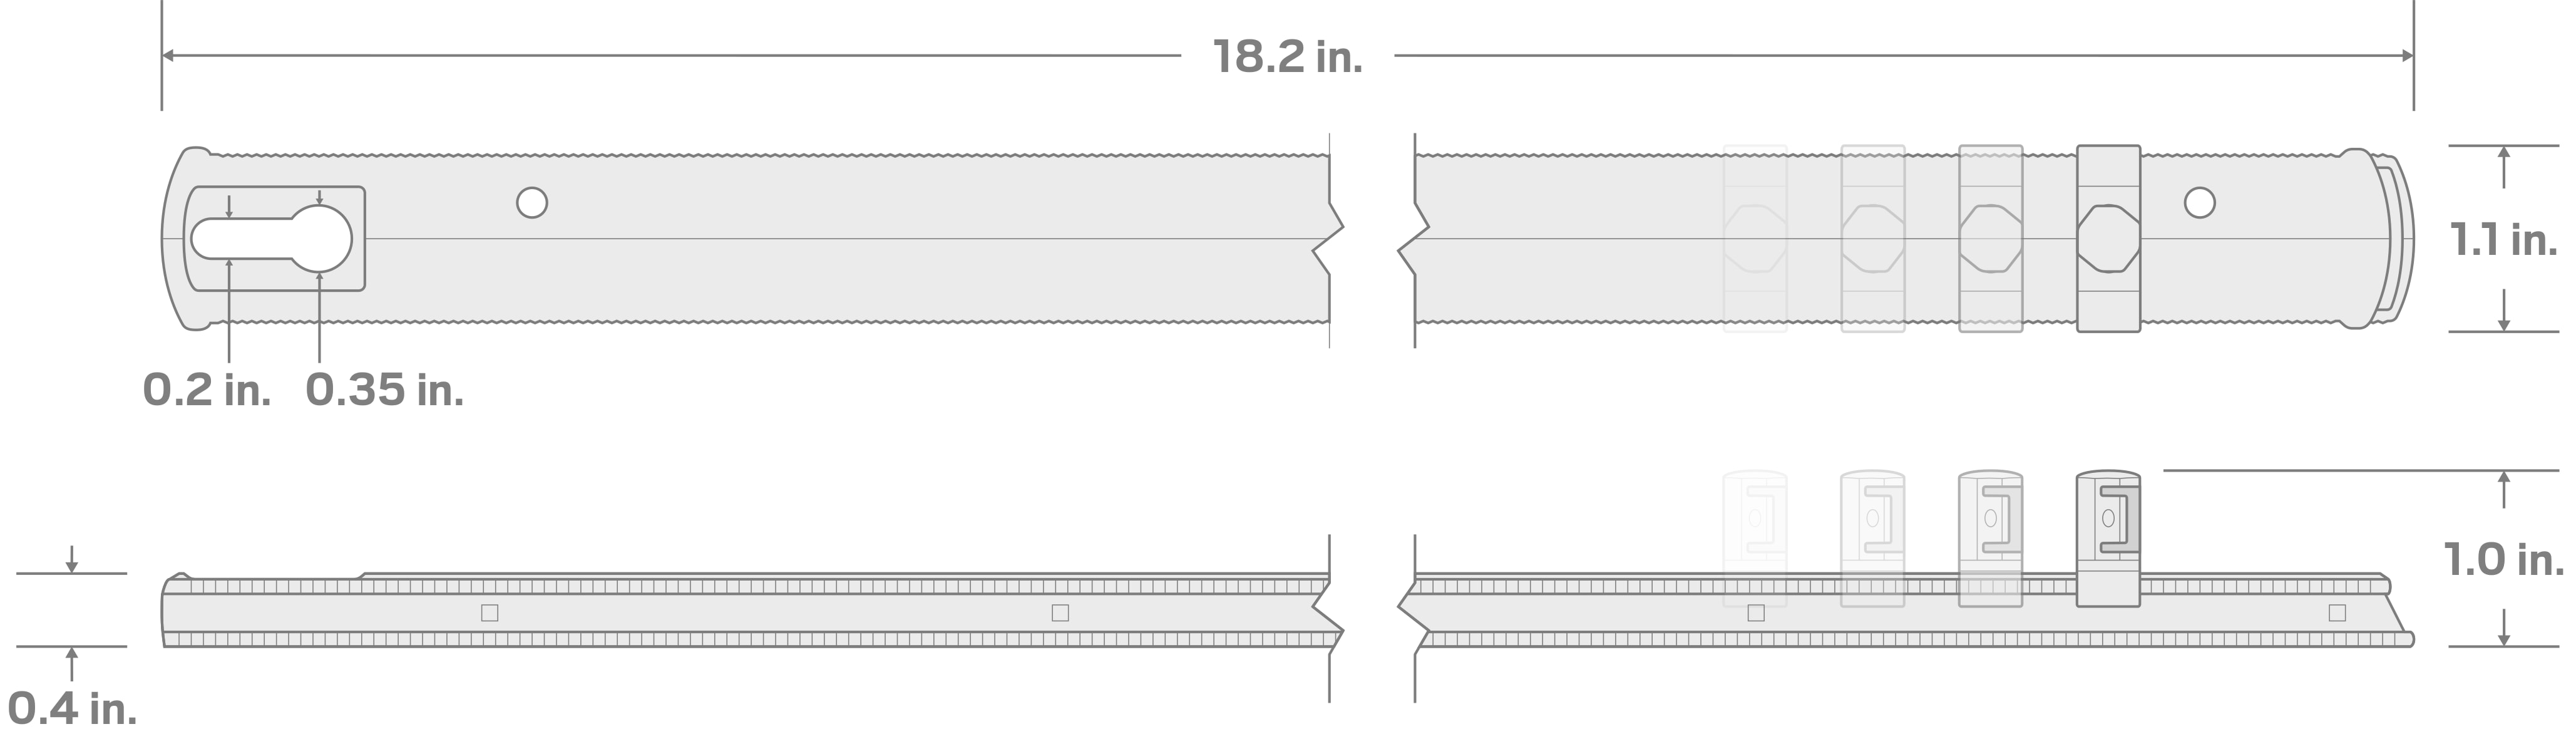 Specs for 3/8 Inch Drive x 18 Inch Socket Rail, 20 Clips (Black)